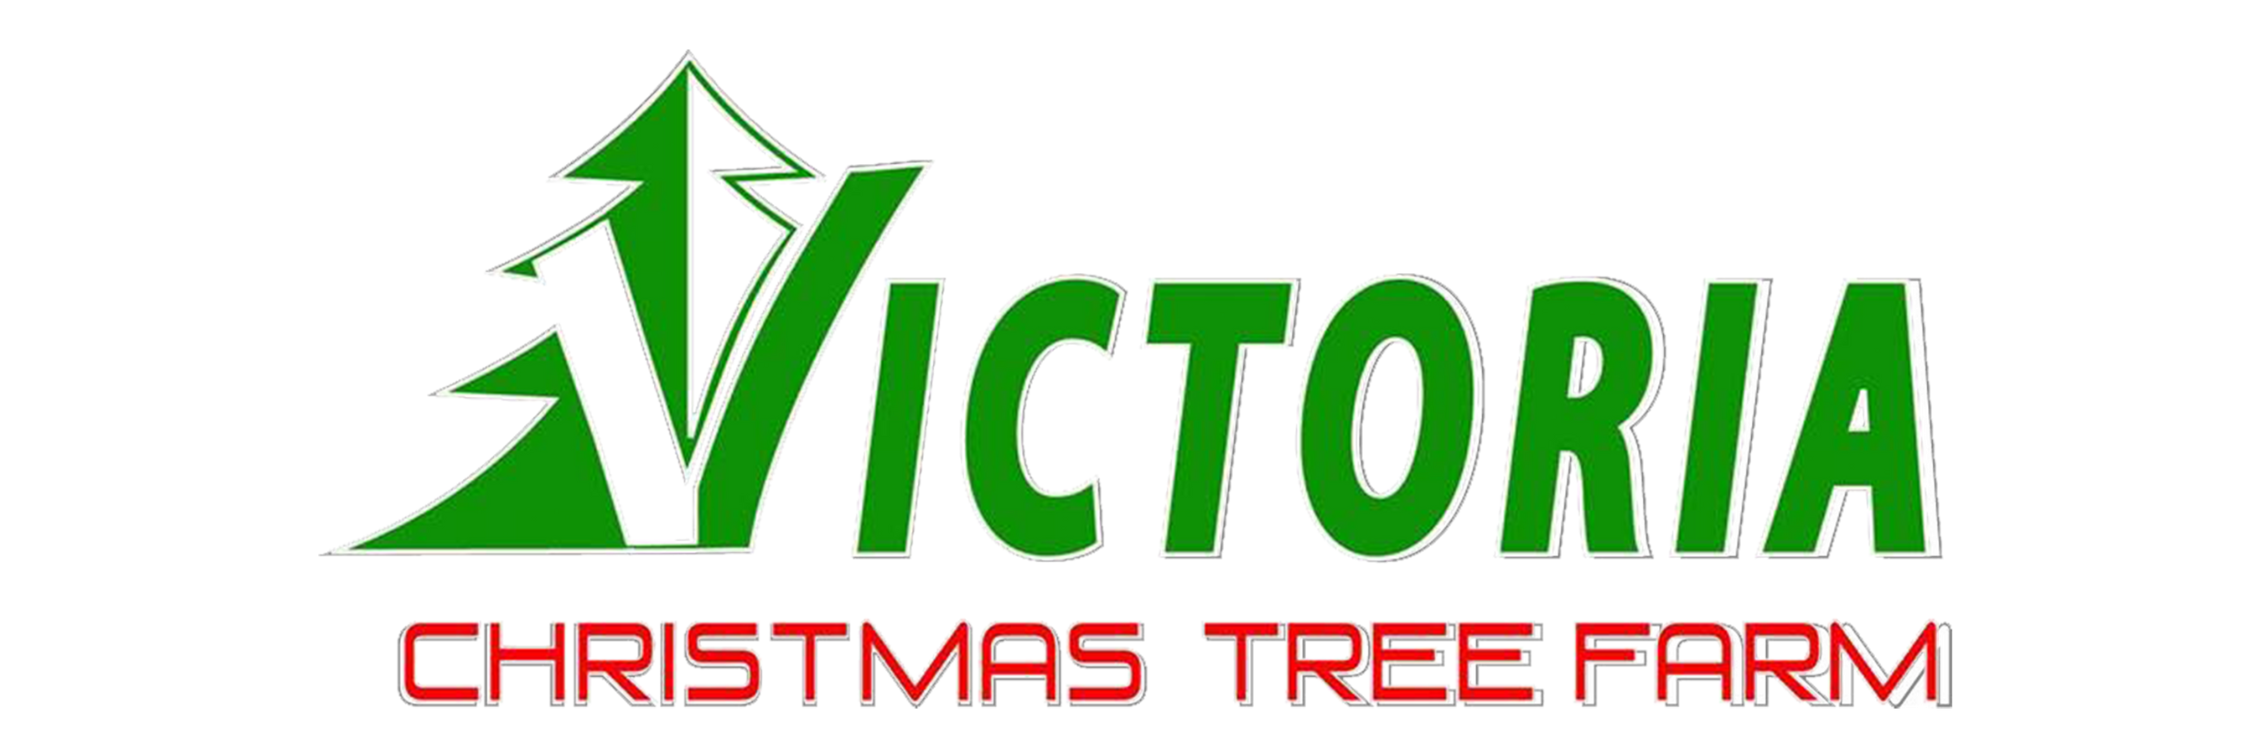 VICTORIA CHRISTMAS TREE FARM